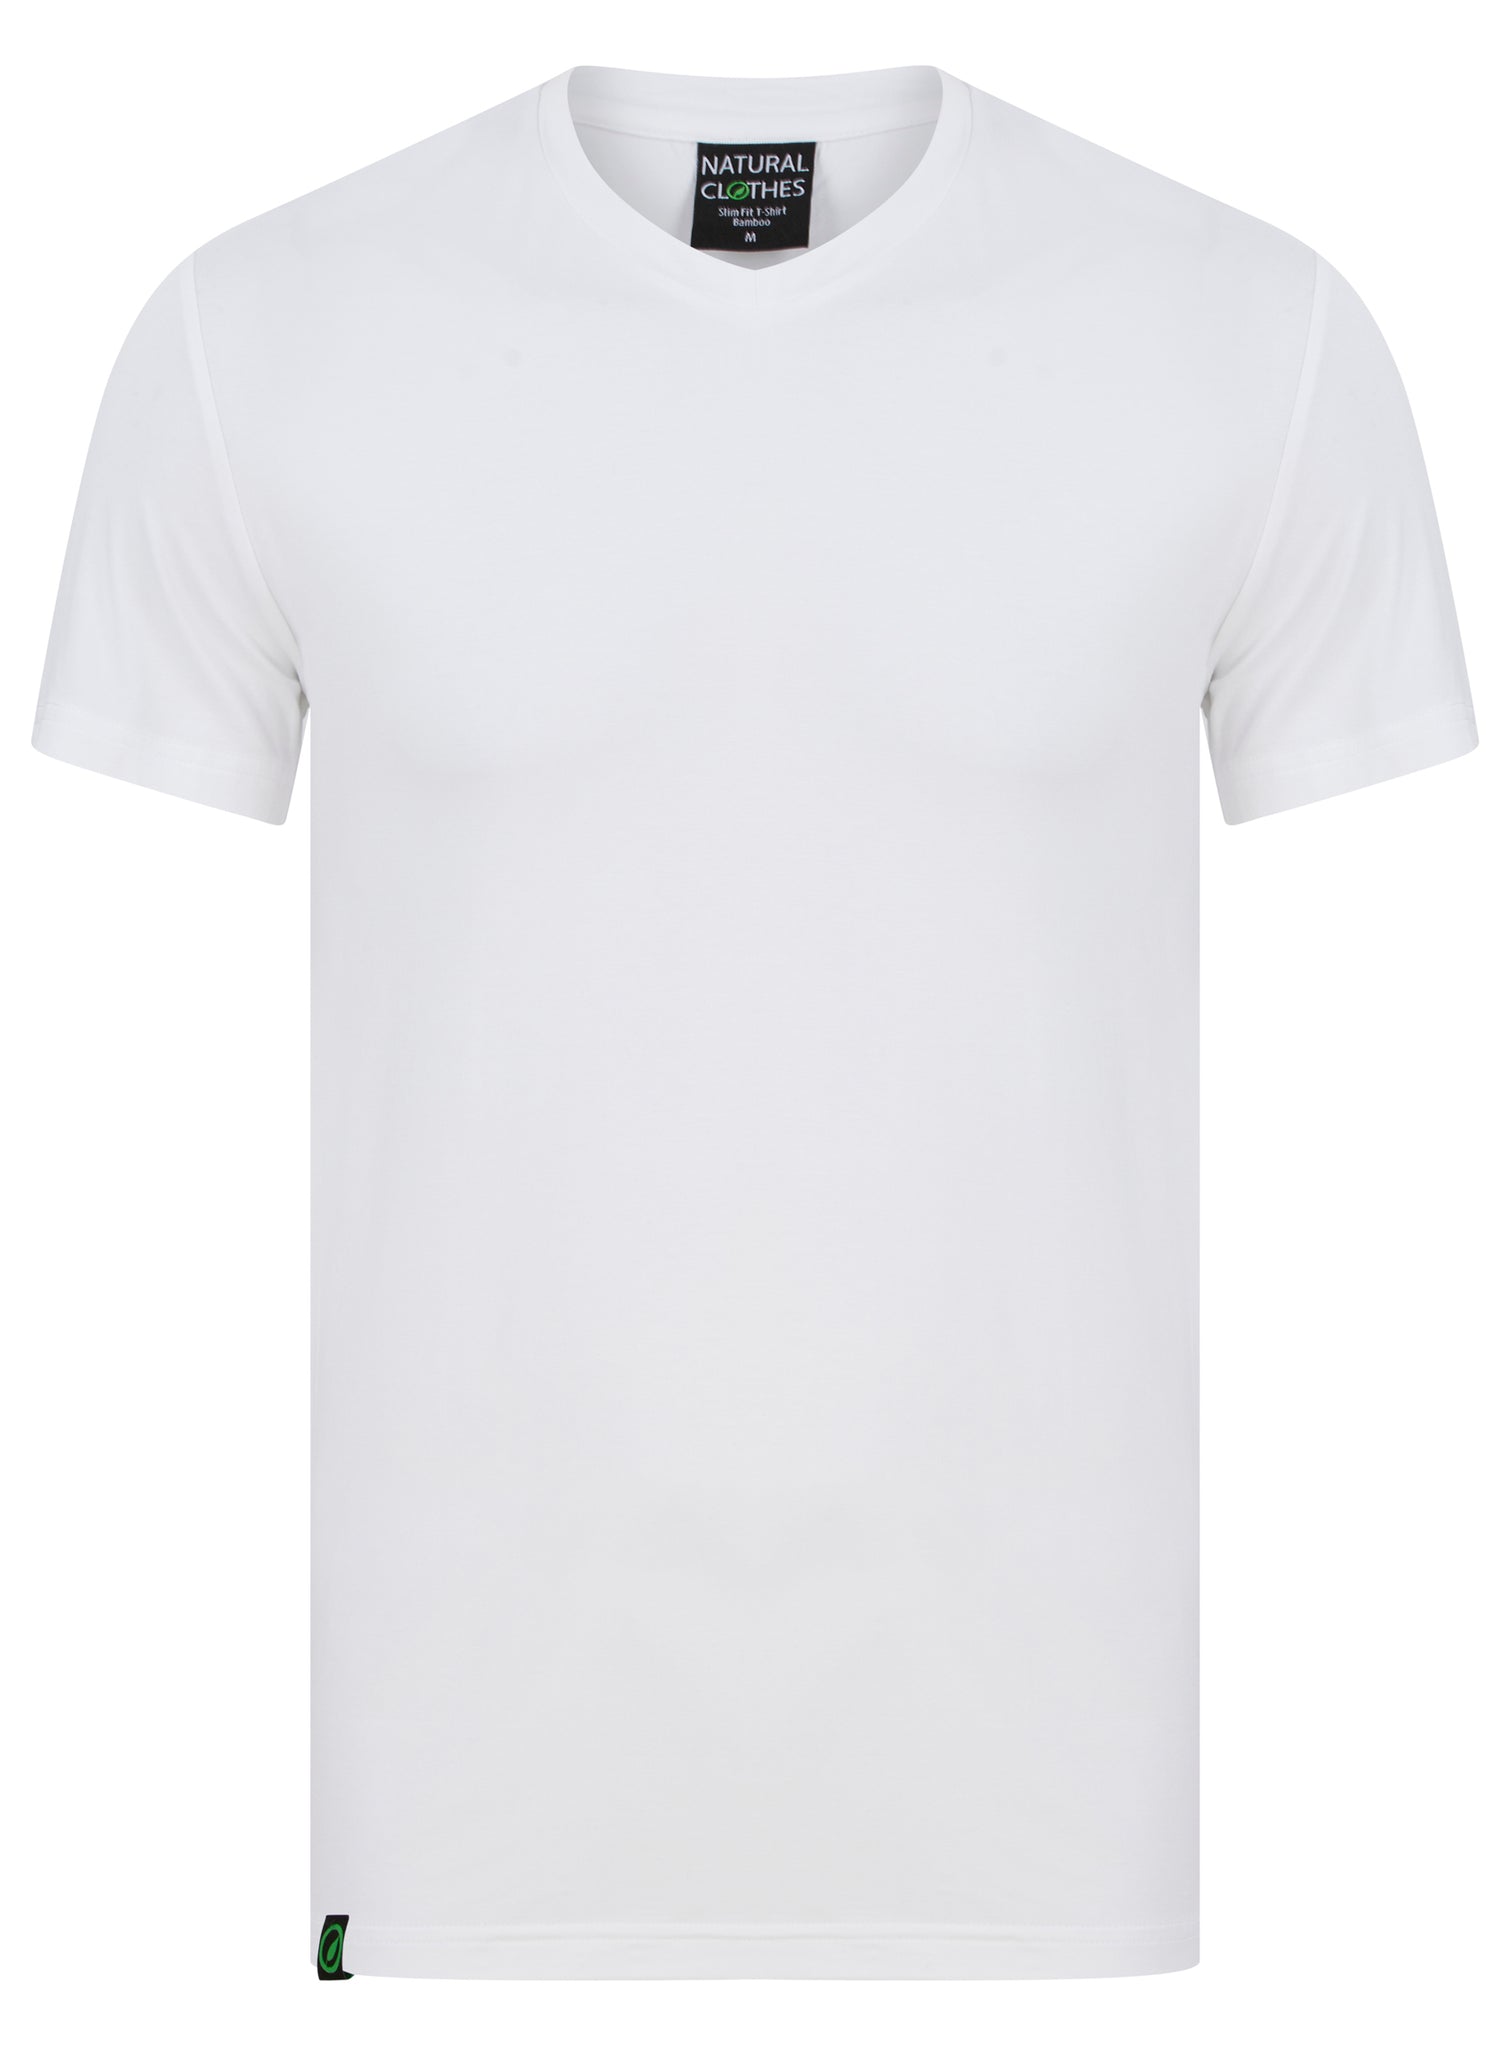 Bamboo T-Shirt V-Neck Slim Fit White